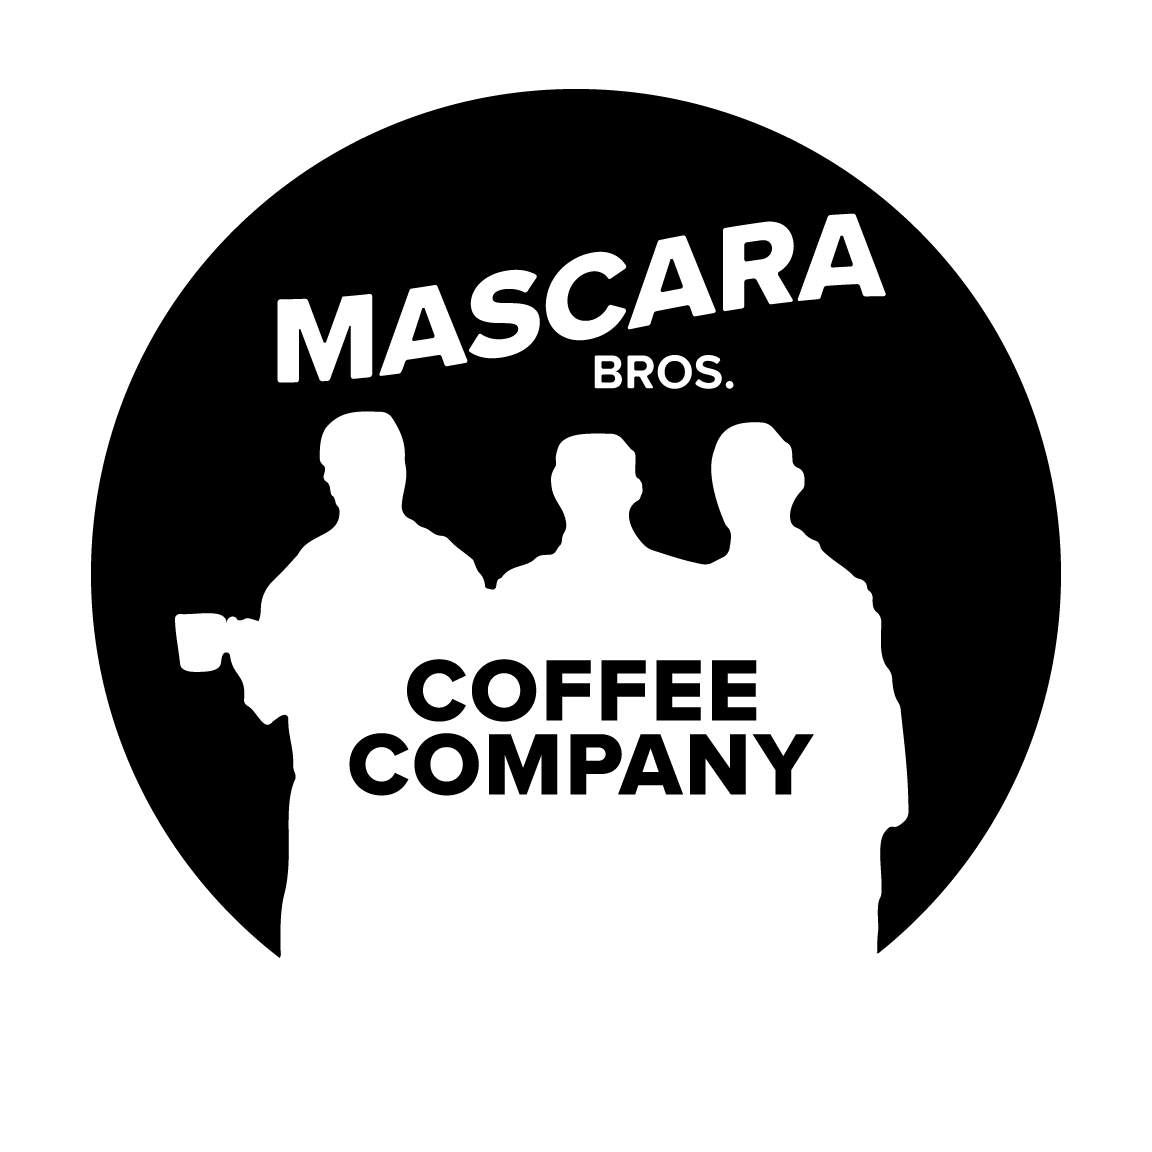 Mascara Bros Coffee